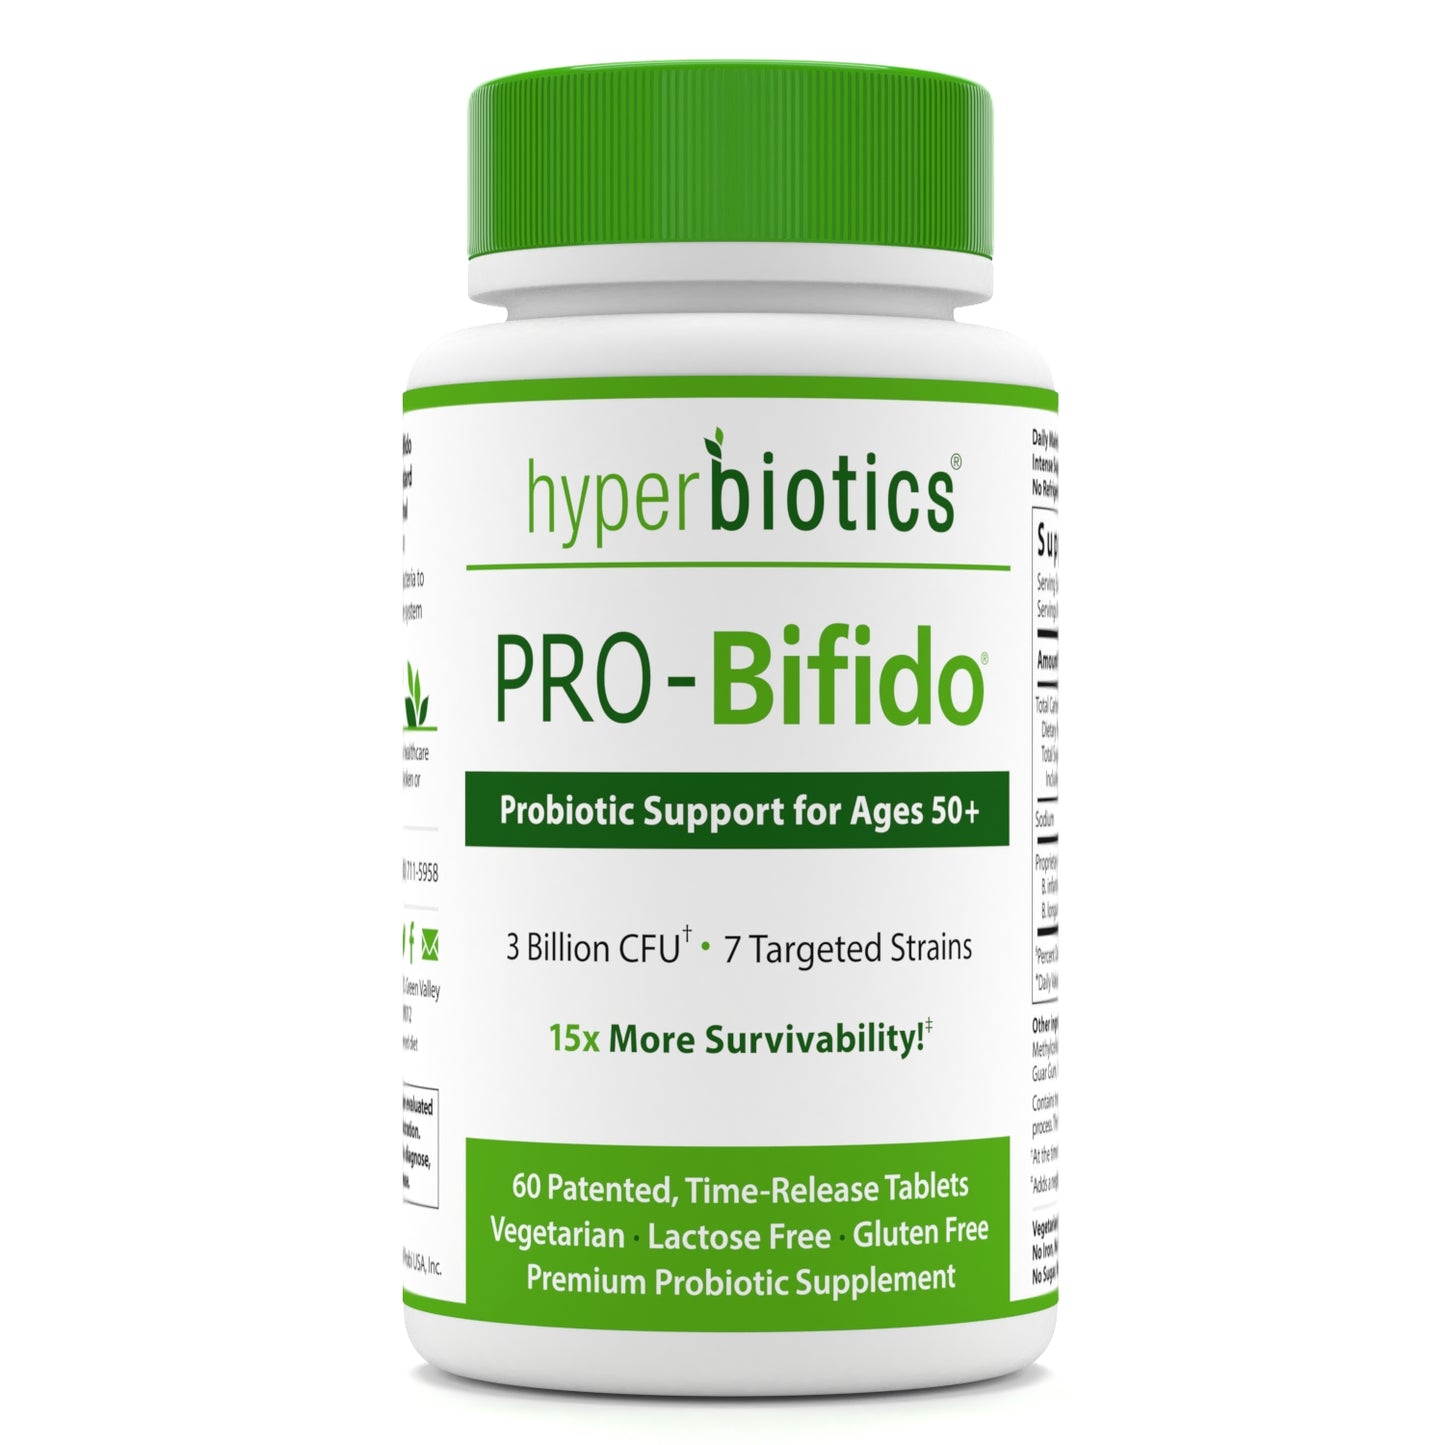 PRO-Bifido 50+: Immune and Digestive Support for 50+* - Hyperbiotics